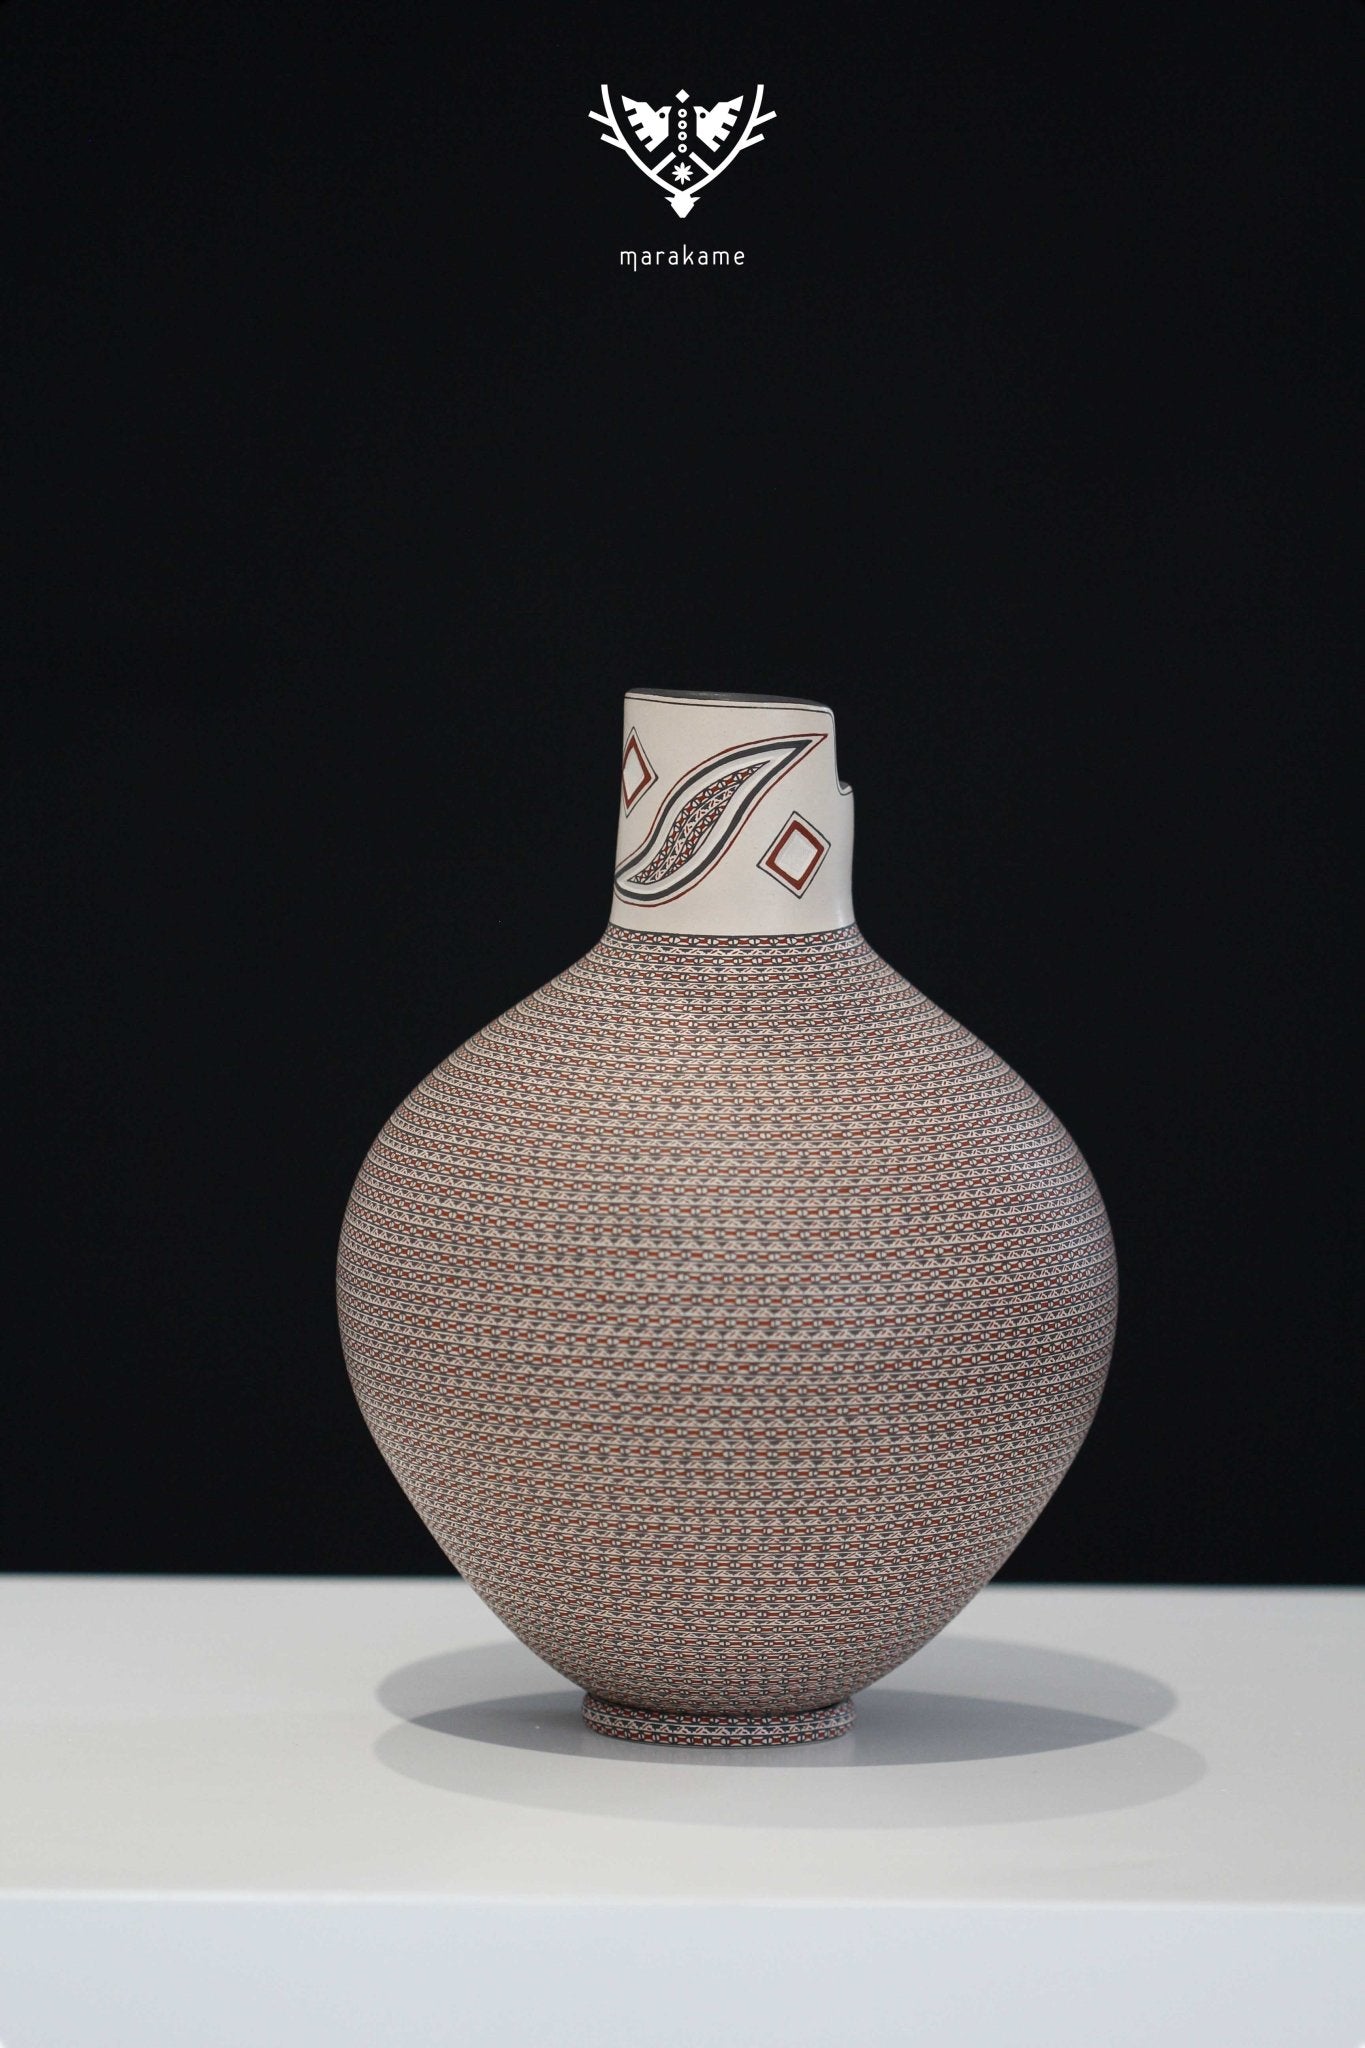 Mata Ortiz Keramik – Paquimé-Sonderstück – Huichol-Kunst – Marakame